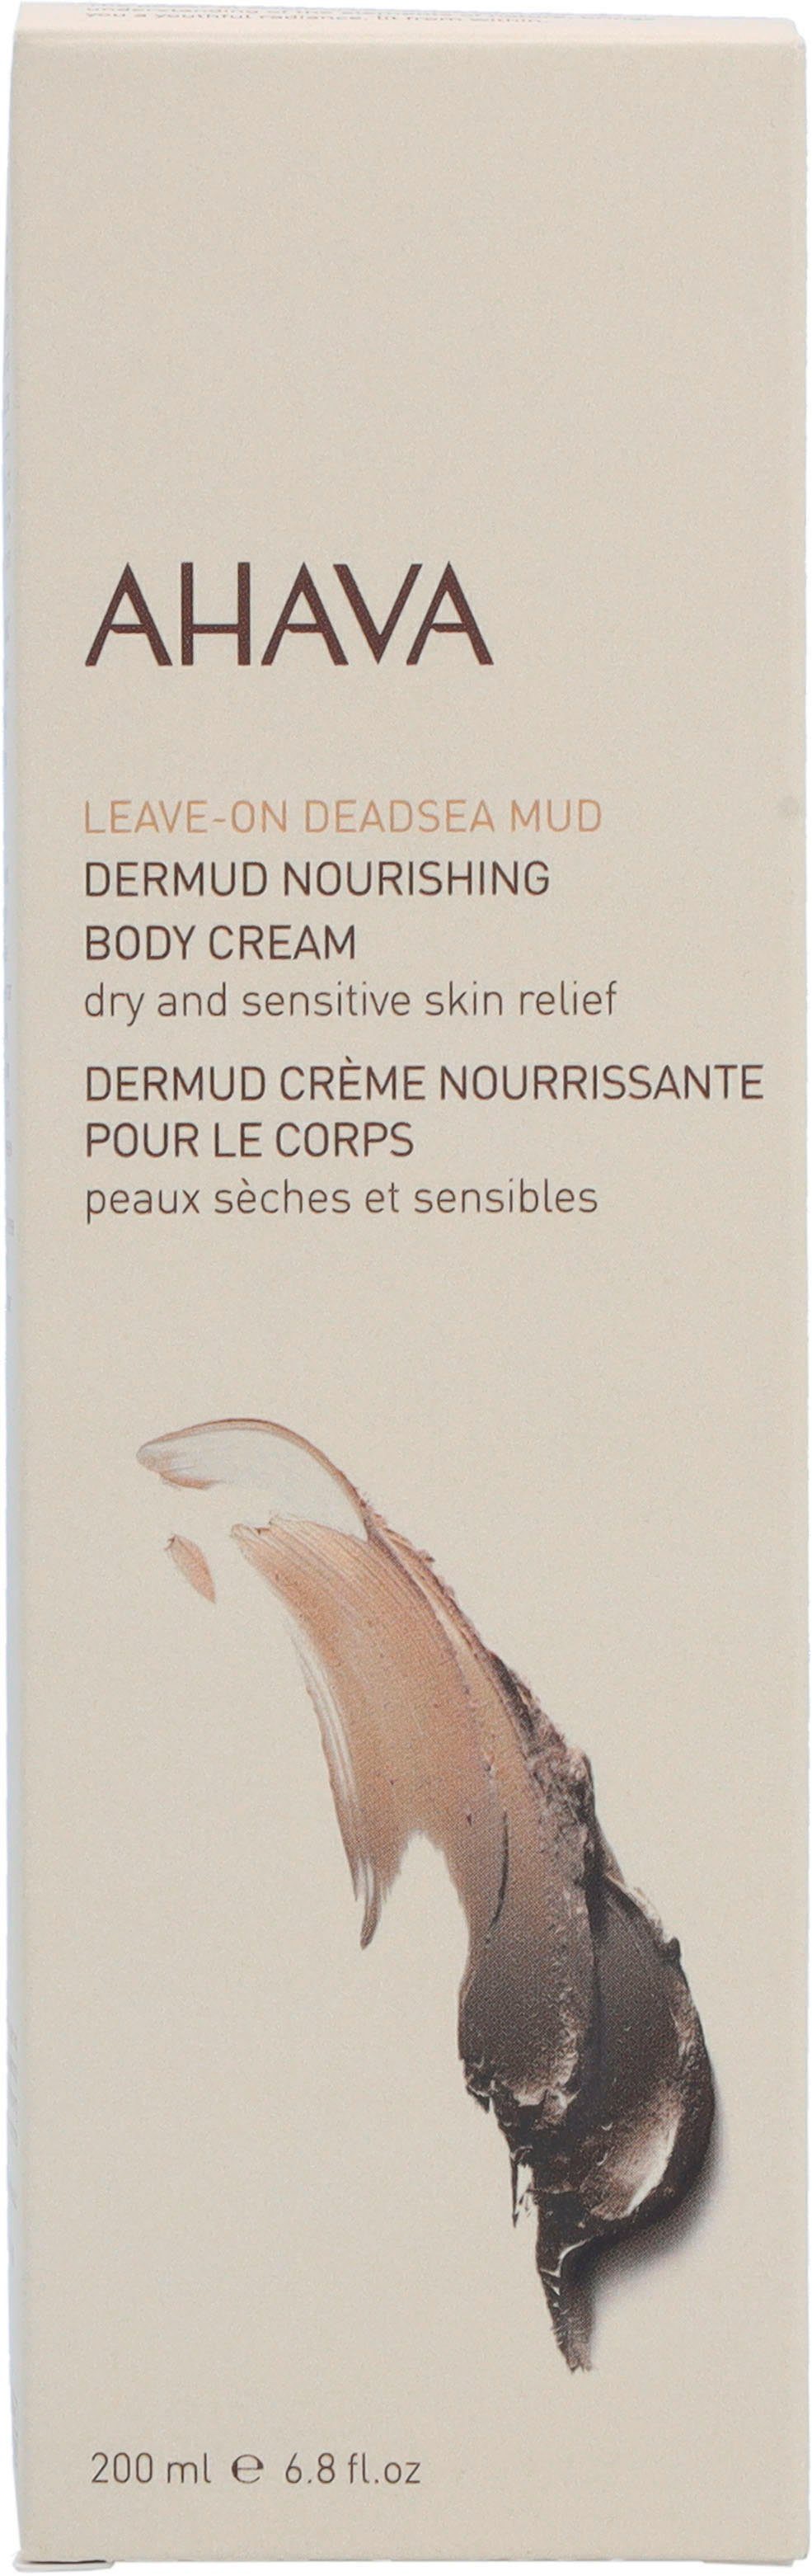 Mud AHAVA Nourishing Körpercreme Body Deadsea Cream Dermud